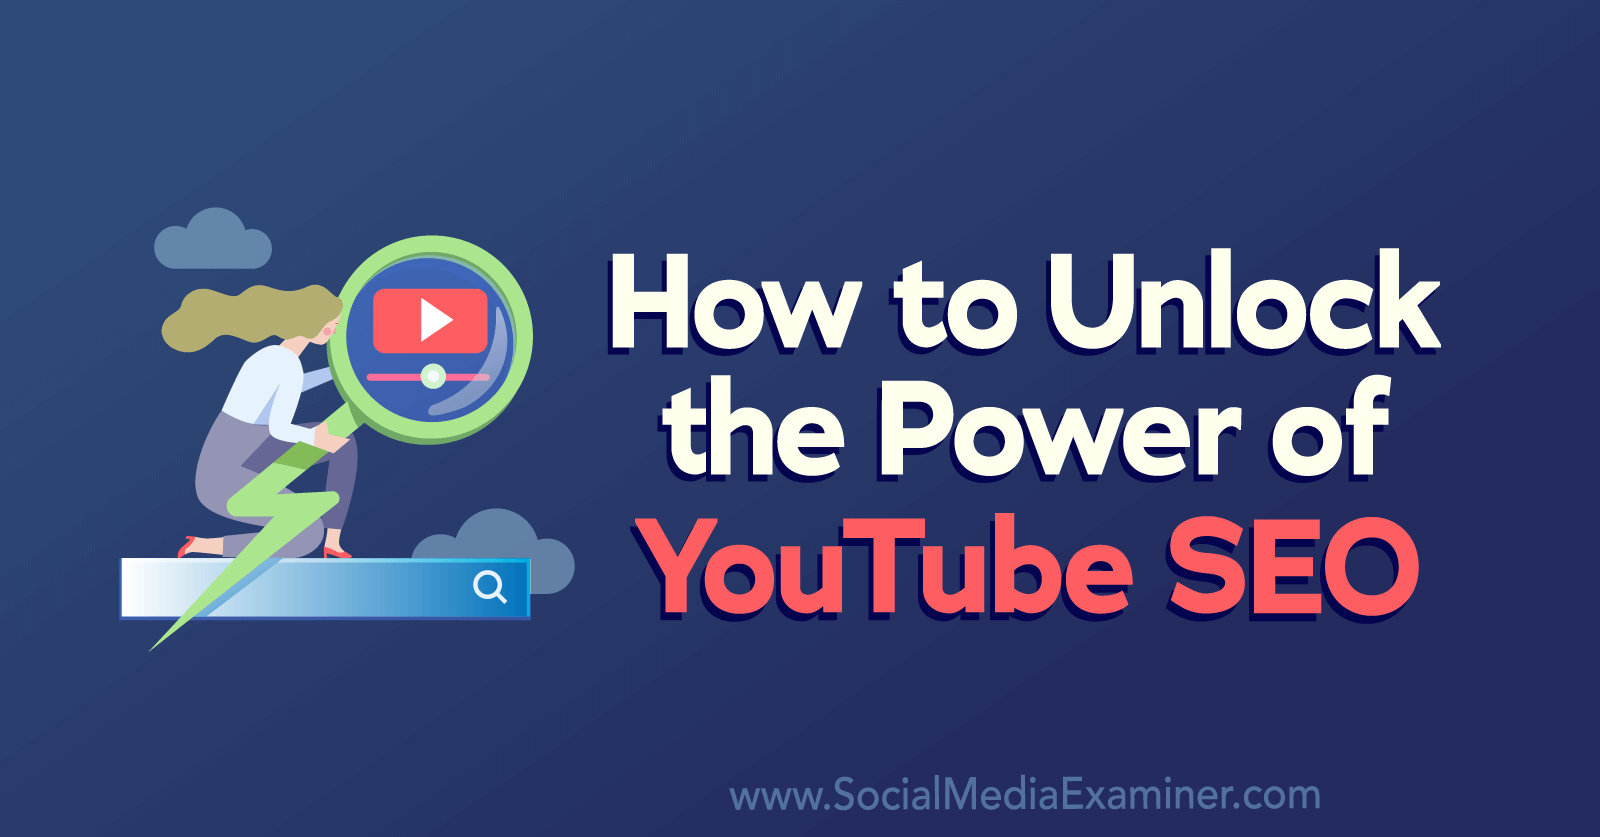 How to Unlock the Power of YouTube SEO by Social Media Examiner